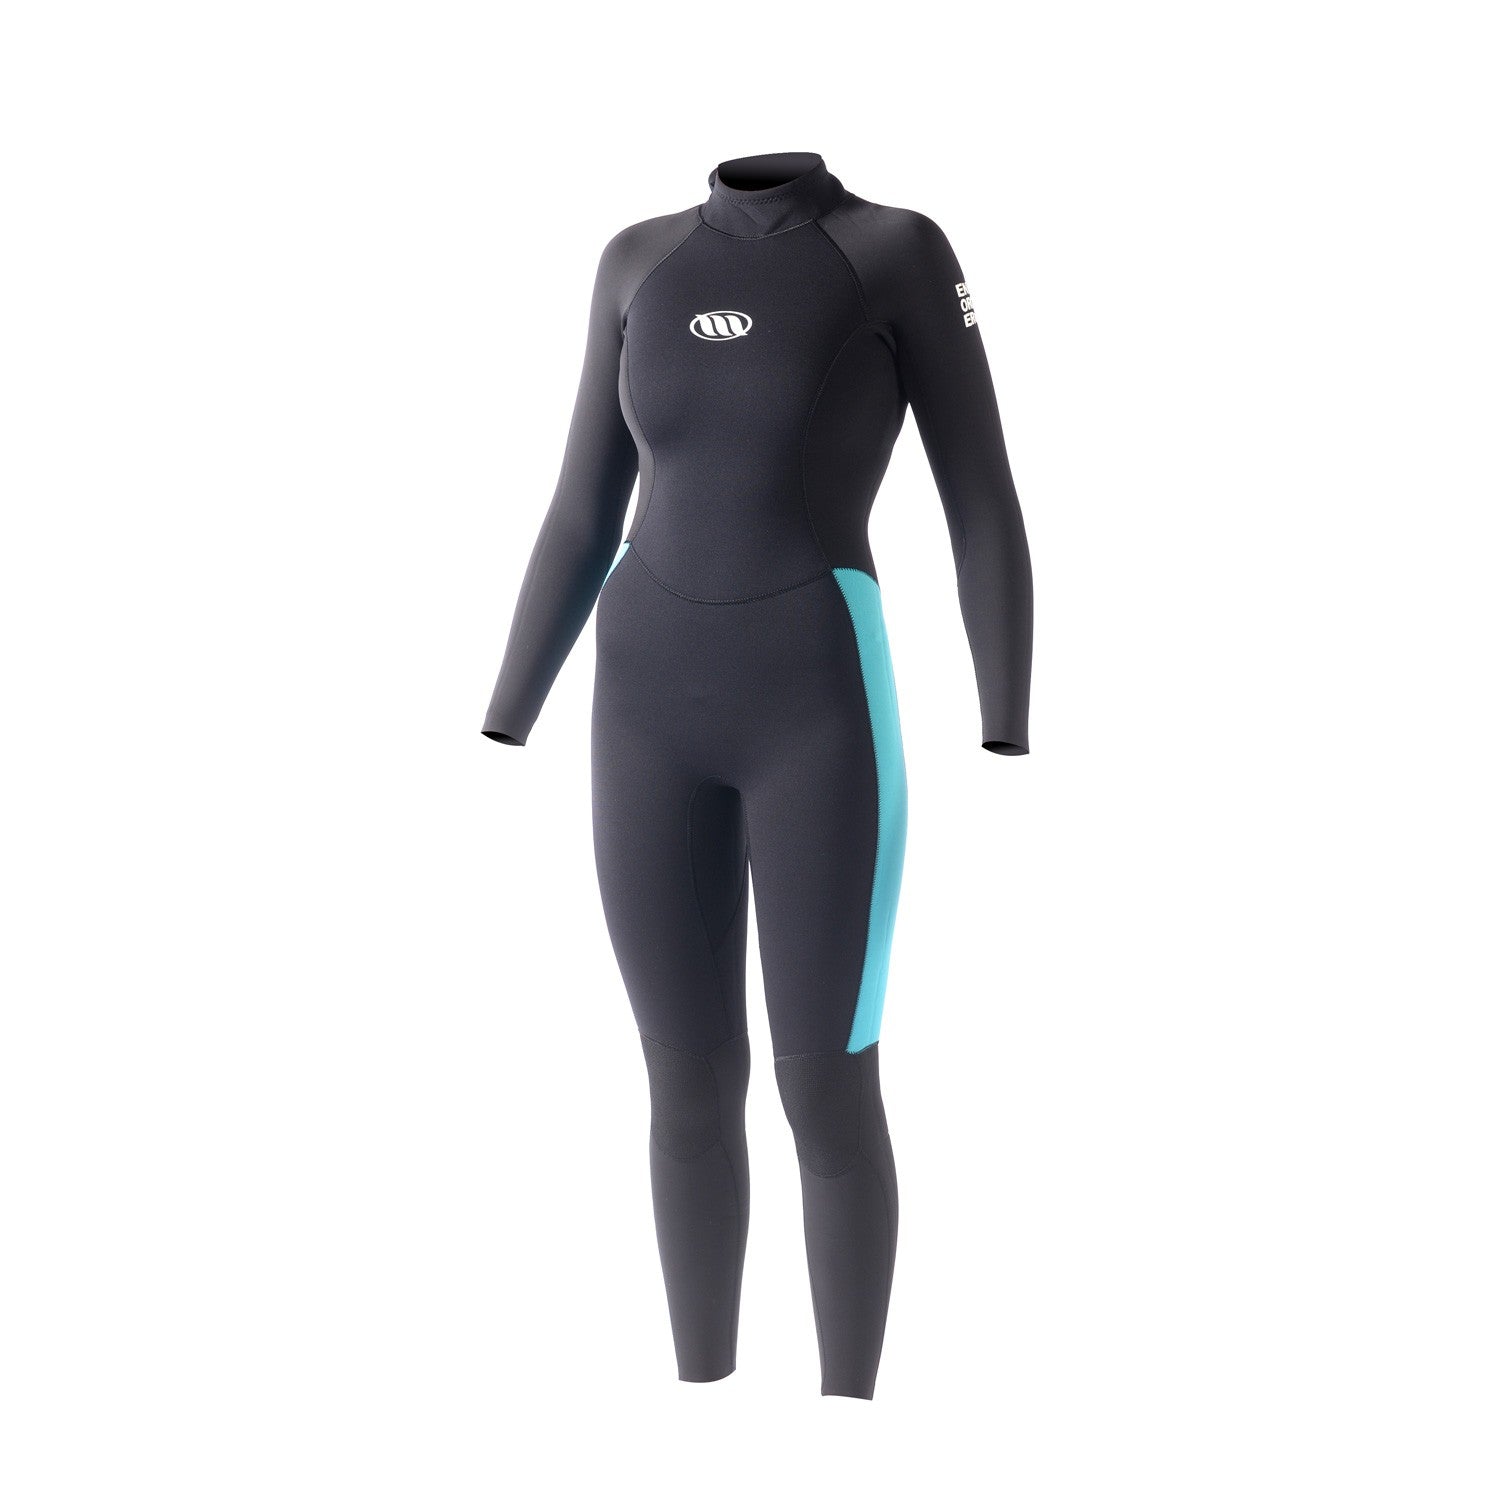 WEST - Traje de surf para mujer - Enforcer Lady 3/2mm back zip - Negro / Azul